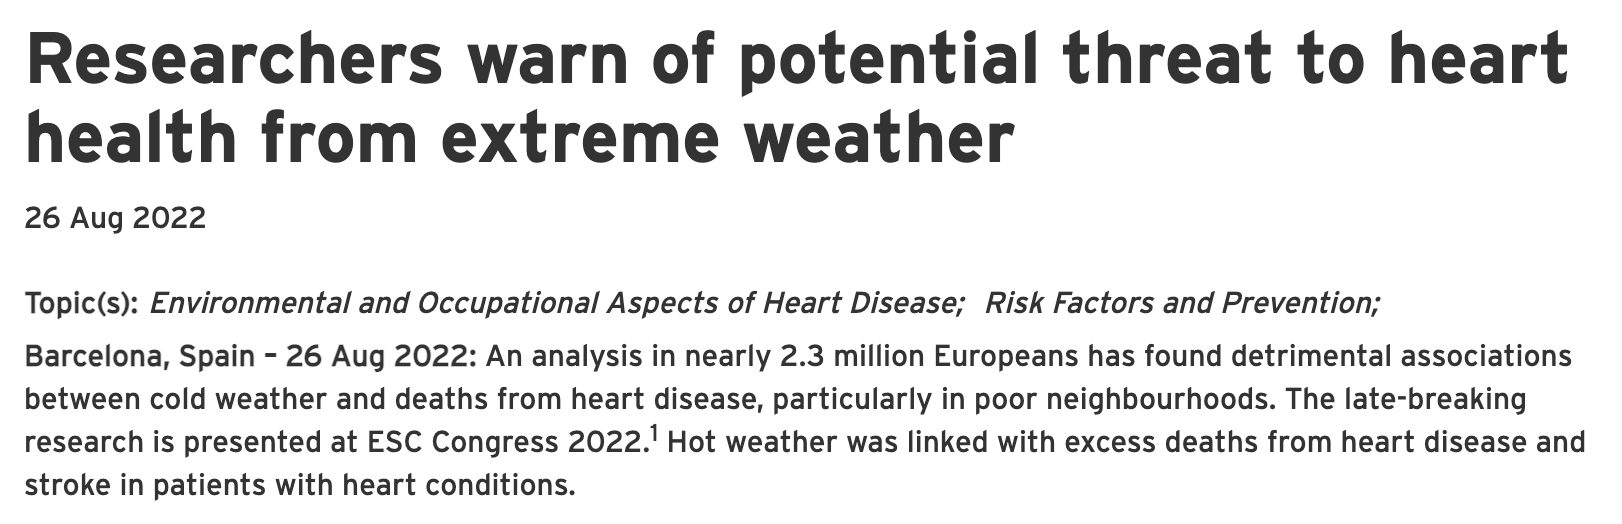 ESC 2022：研究人员警告极端天气对心脏健康的潜在威胁